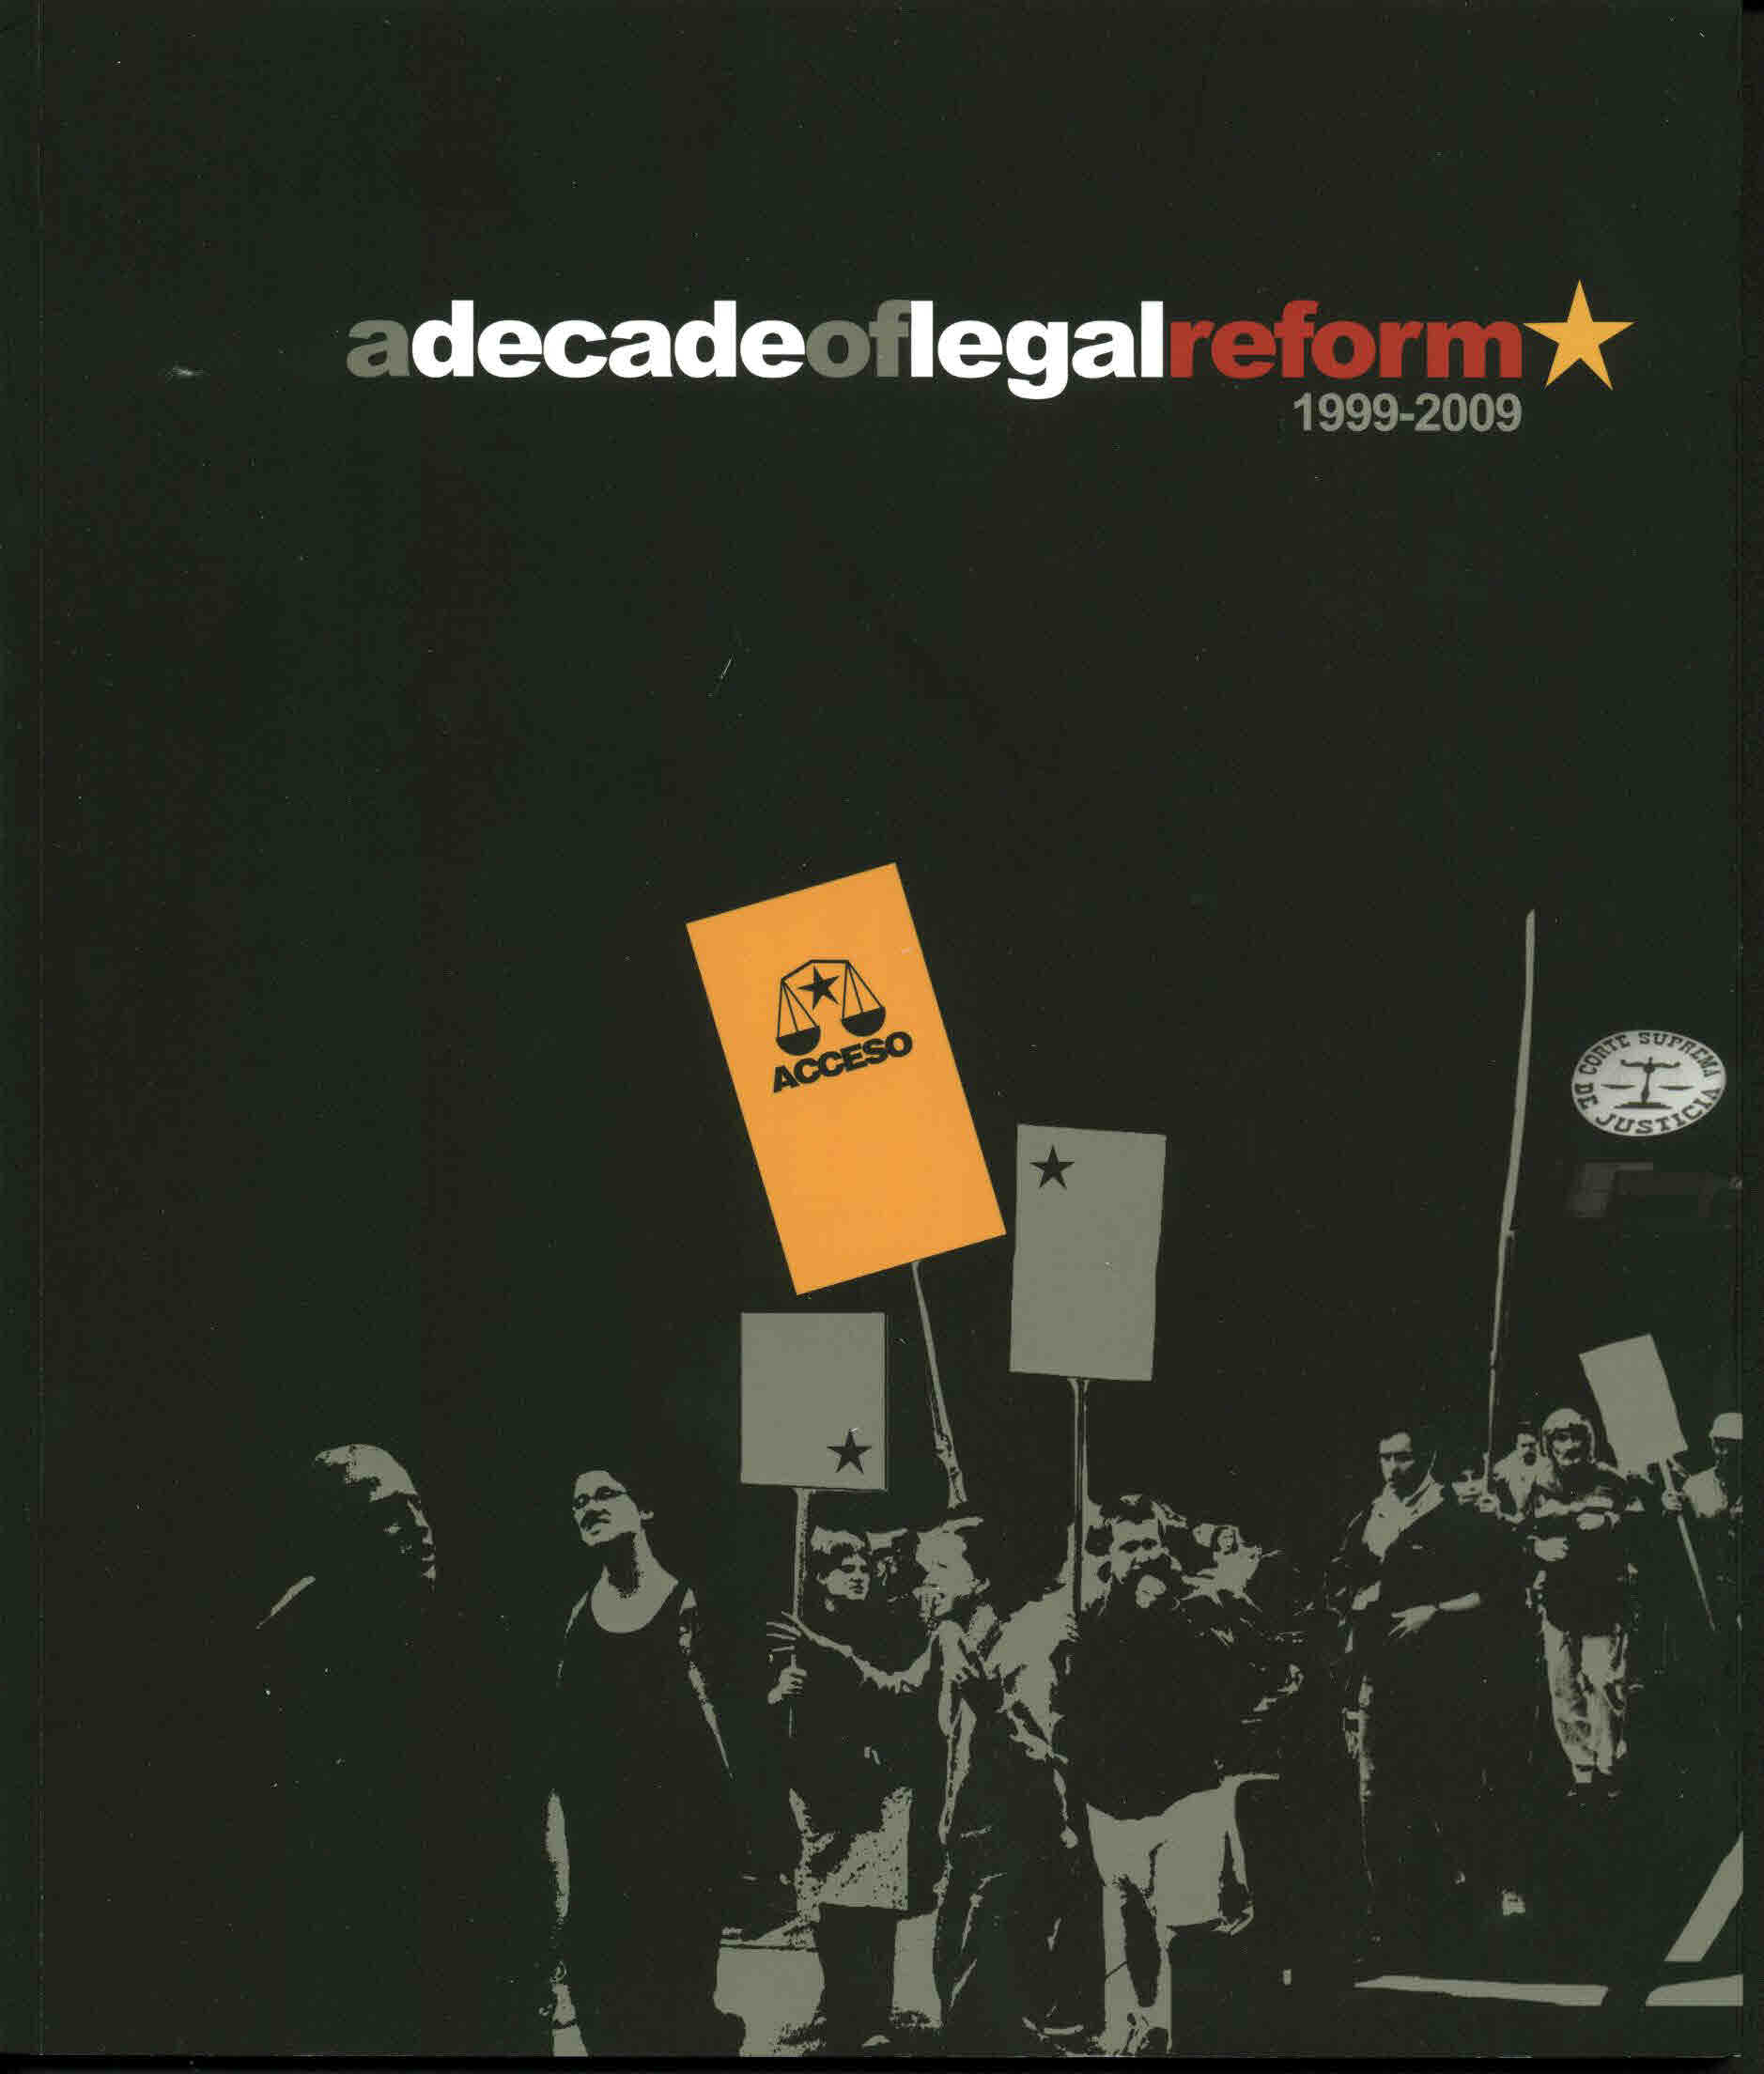 A decade of legal reform 1999-2009